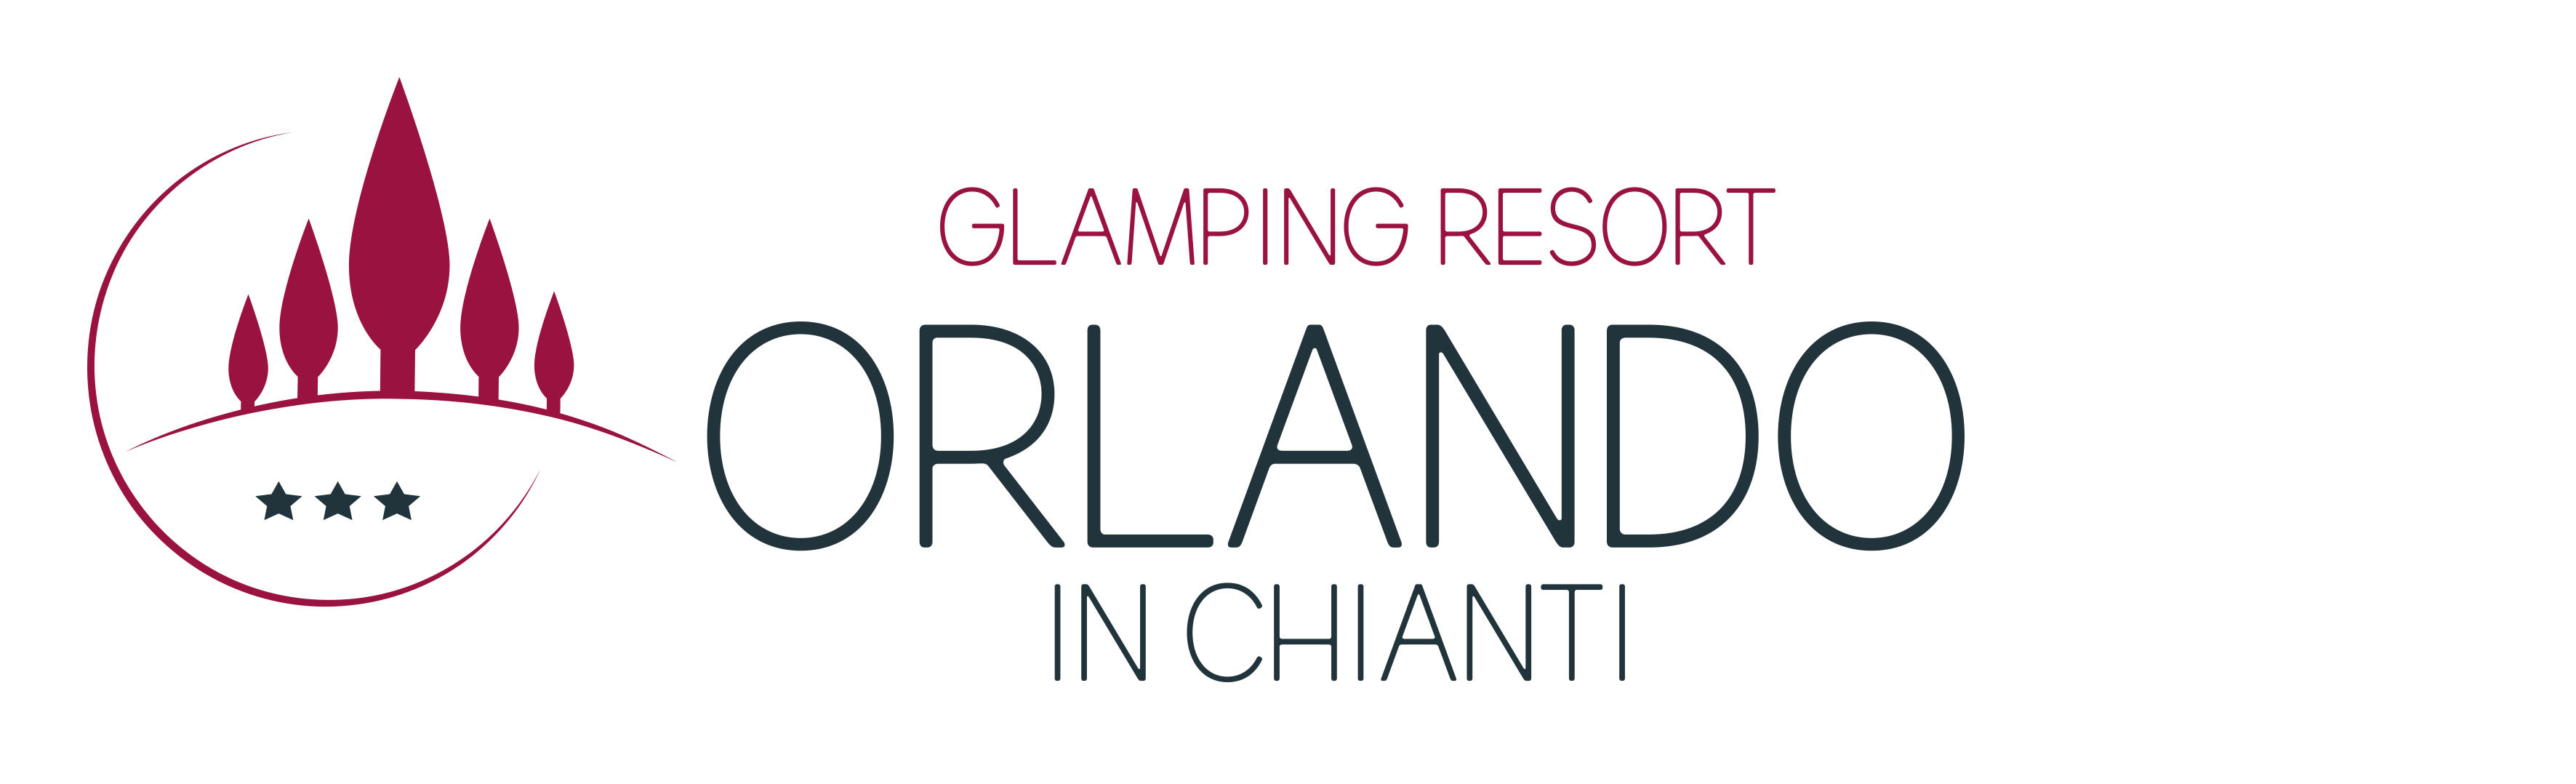 Orlando in Chianti Glamping Resort